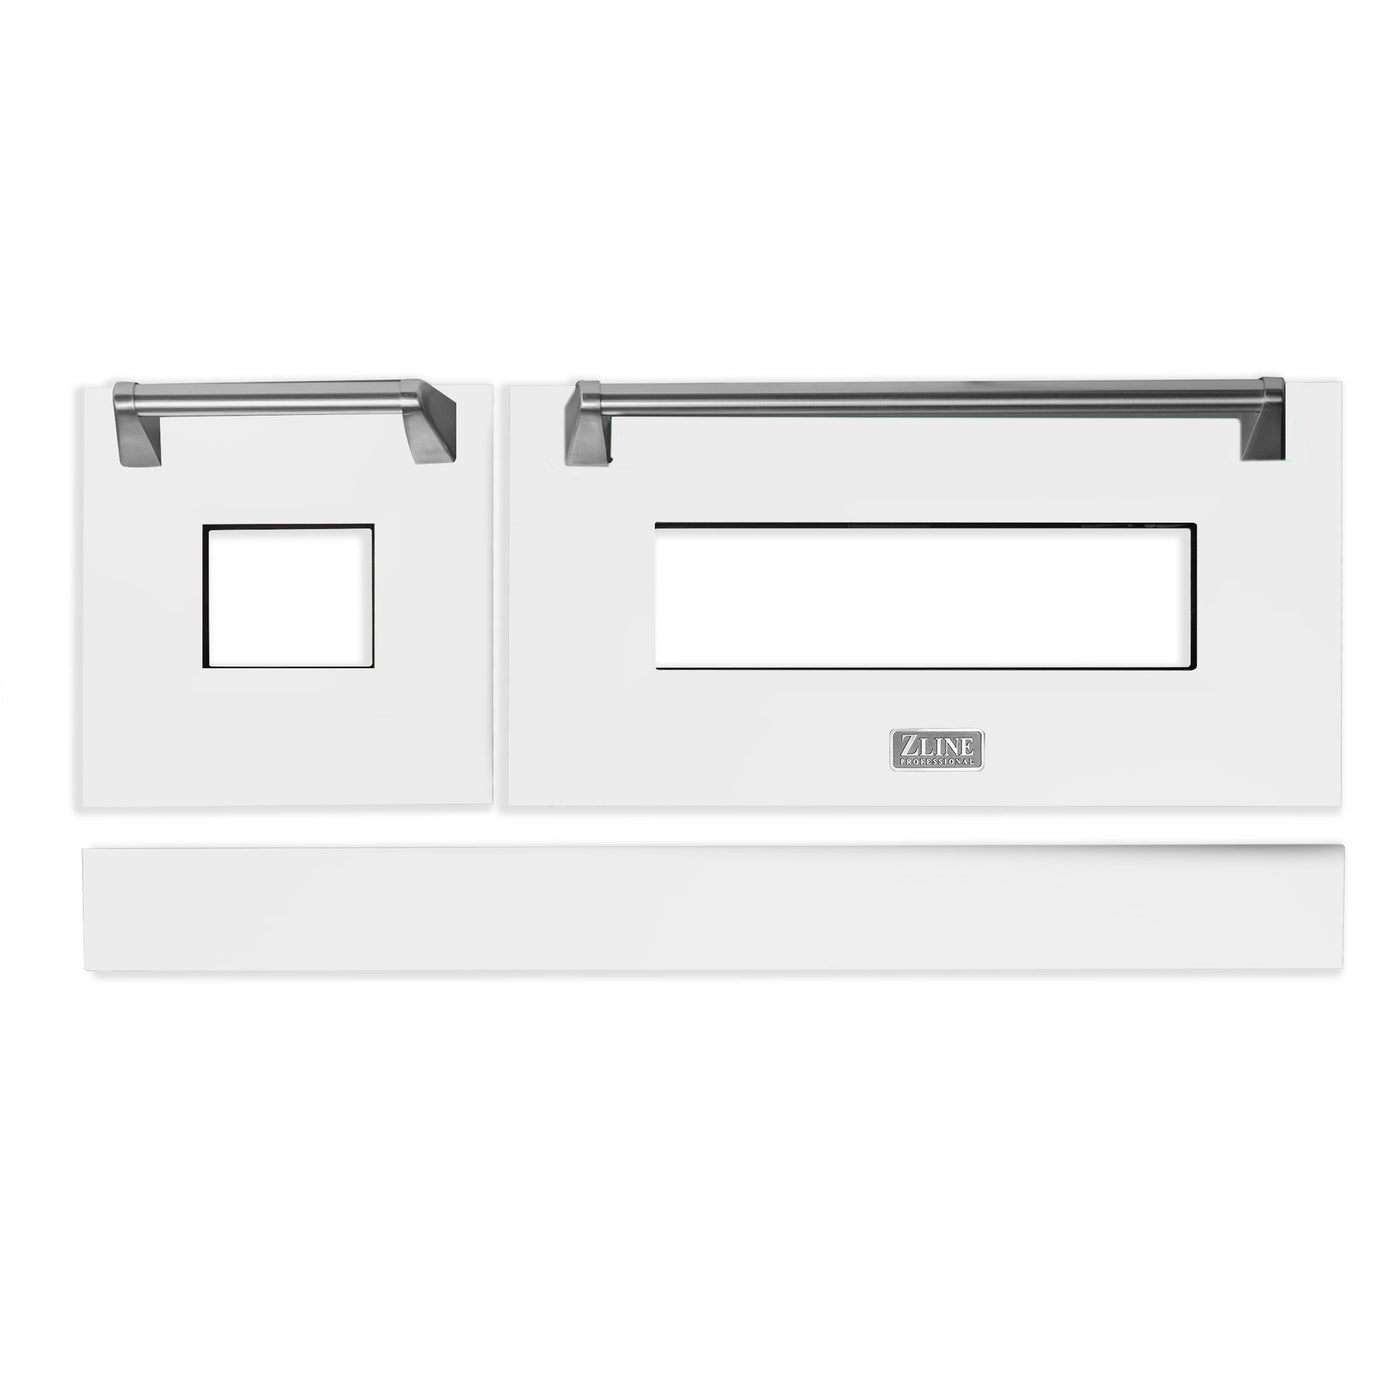 ZLINE Kitchen and Bath, ZLINE 48" Range Door in DuraSnow® Stainless Steel with Color Options, RA-DR-WM-48,